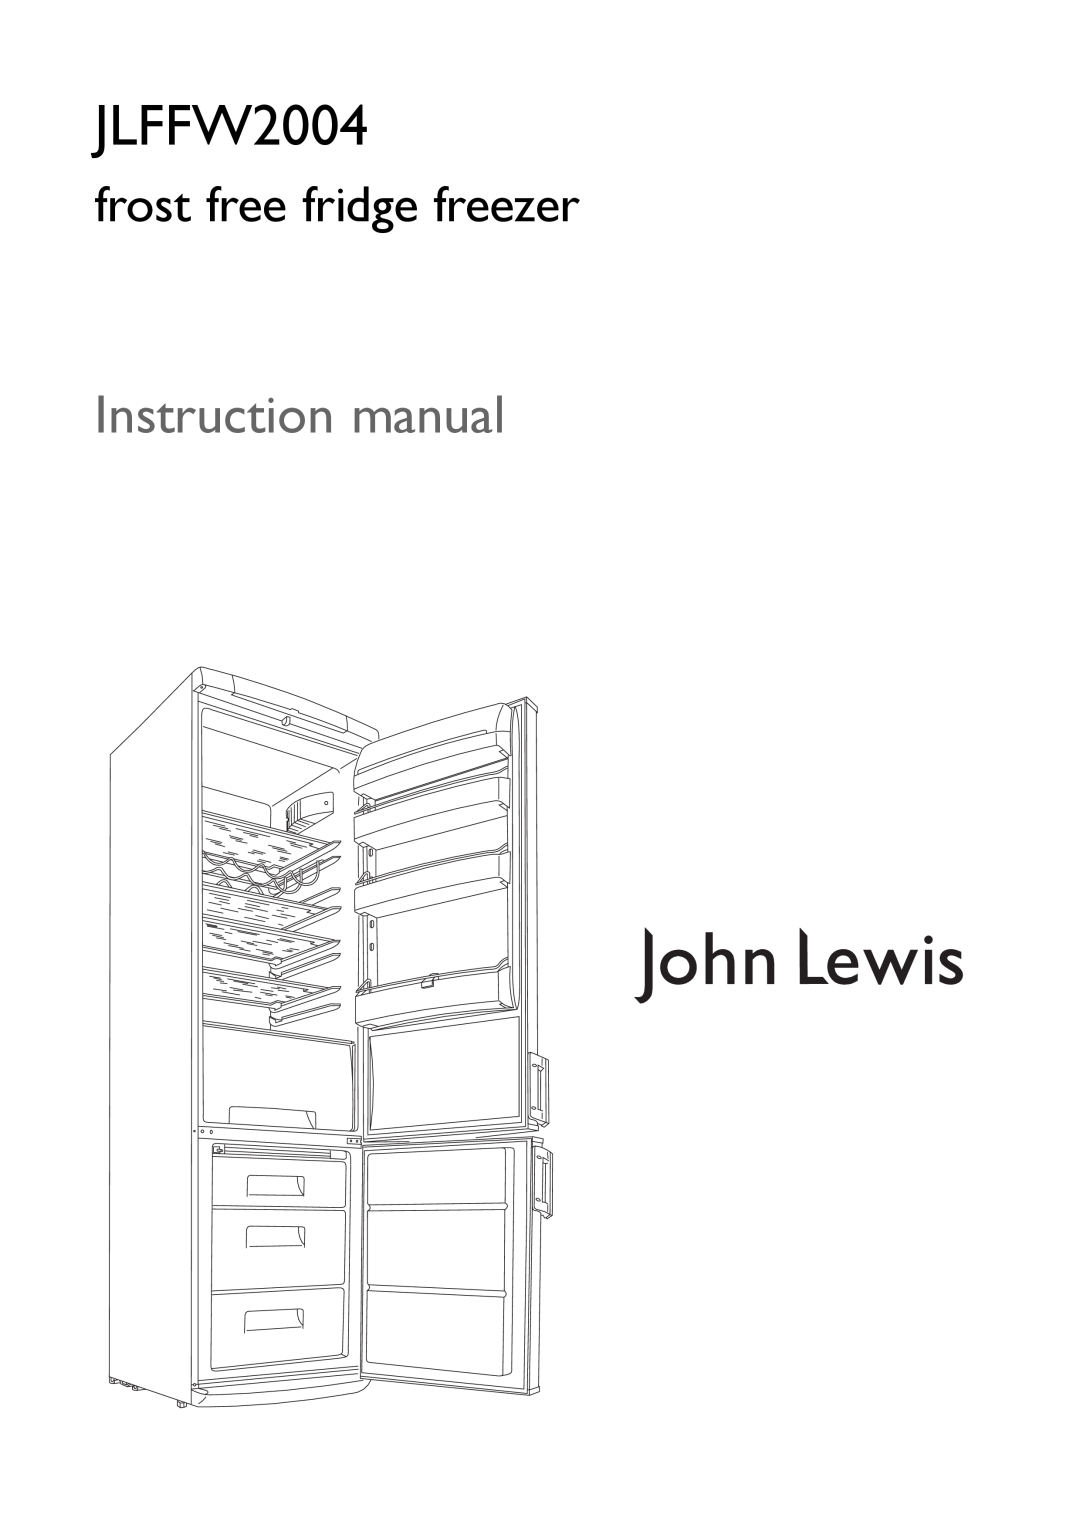 John Lewis JLFFW2004 instruction manual frost free fridge freezer 